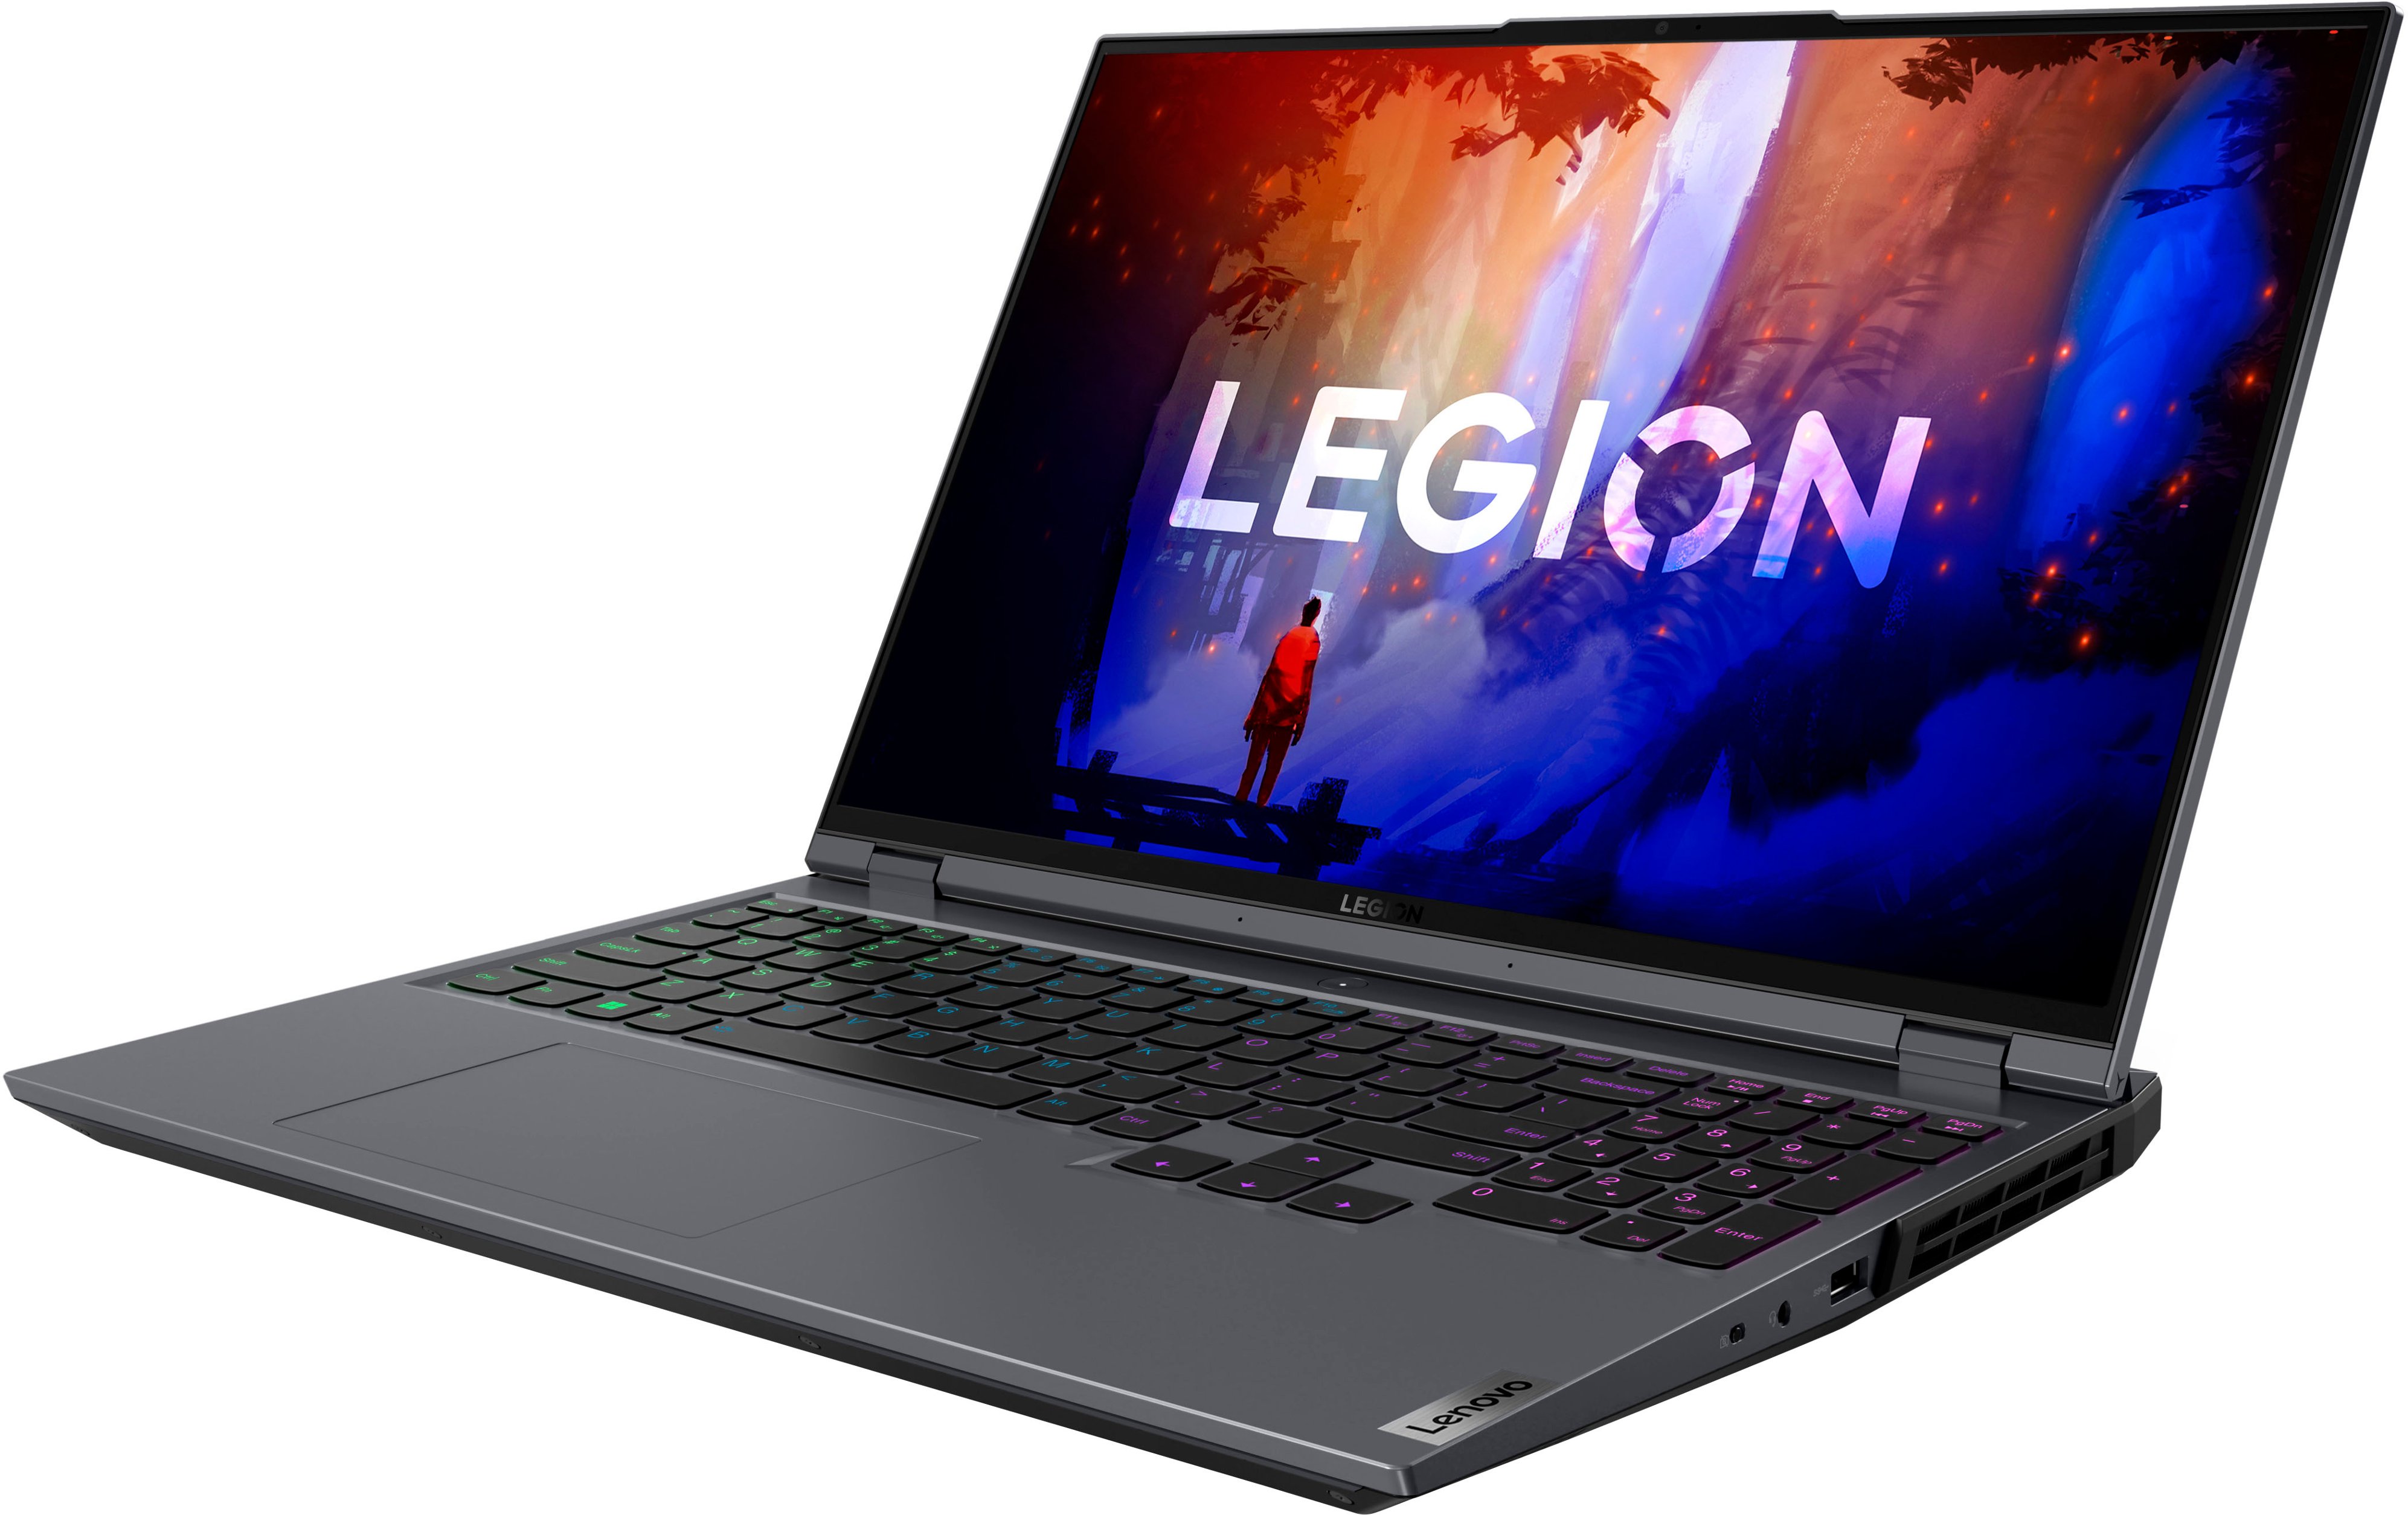 Best Buy: Lenovo Legion 5 Pro 16 Refurbished Laptop 2560 x 1600 NVIDIA  GeForce RTX 3070 AMD Ryzen 7 5800H with 16GB Ram and 512GB SSD 82JQ00F9US